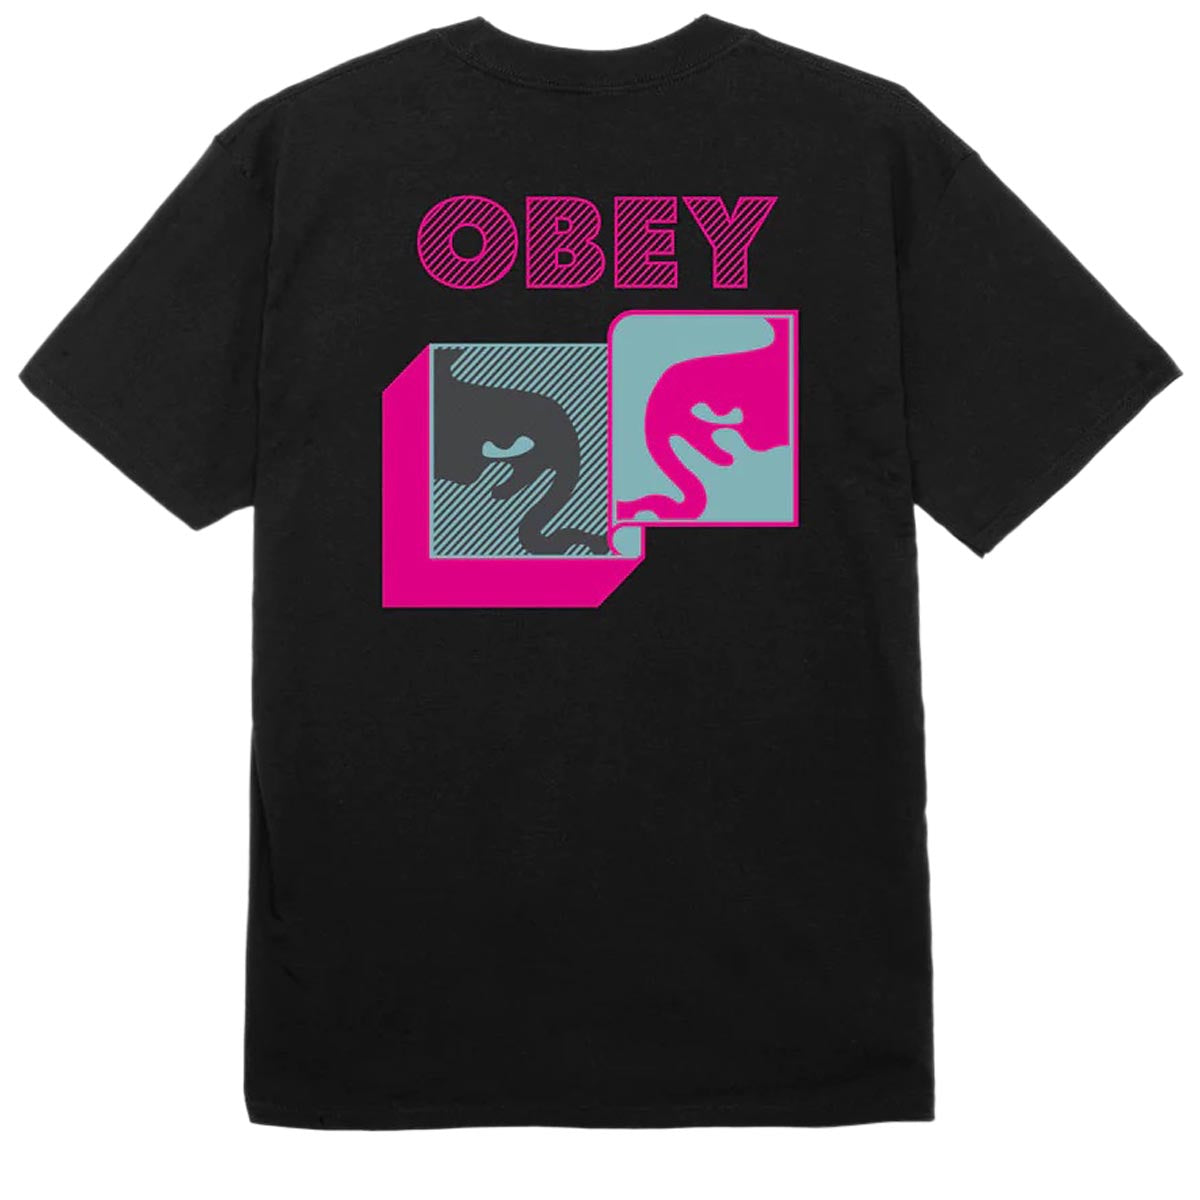 Obey Post Modern T-Shirt - Black image 1